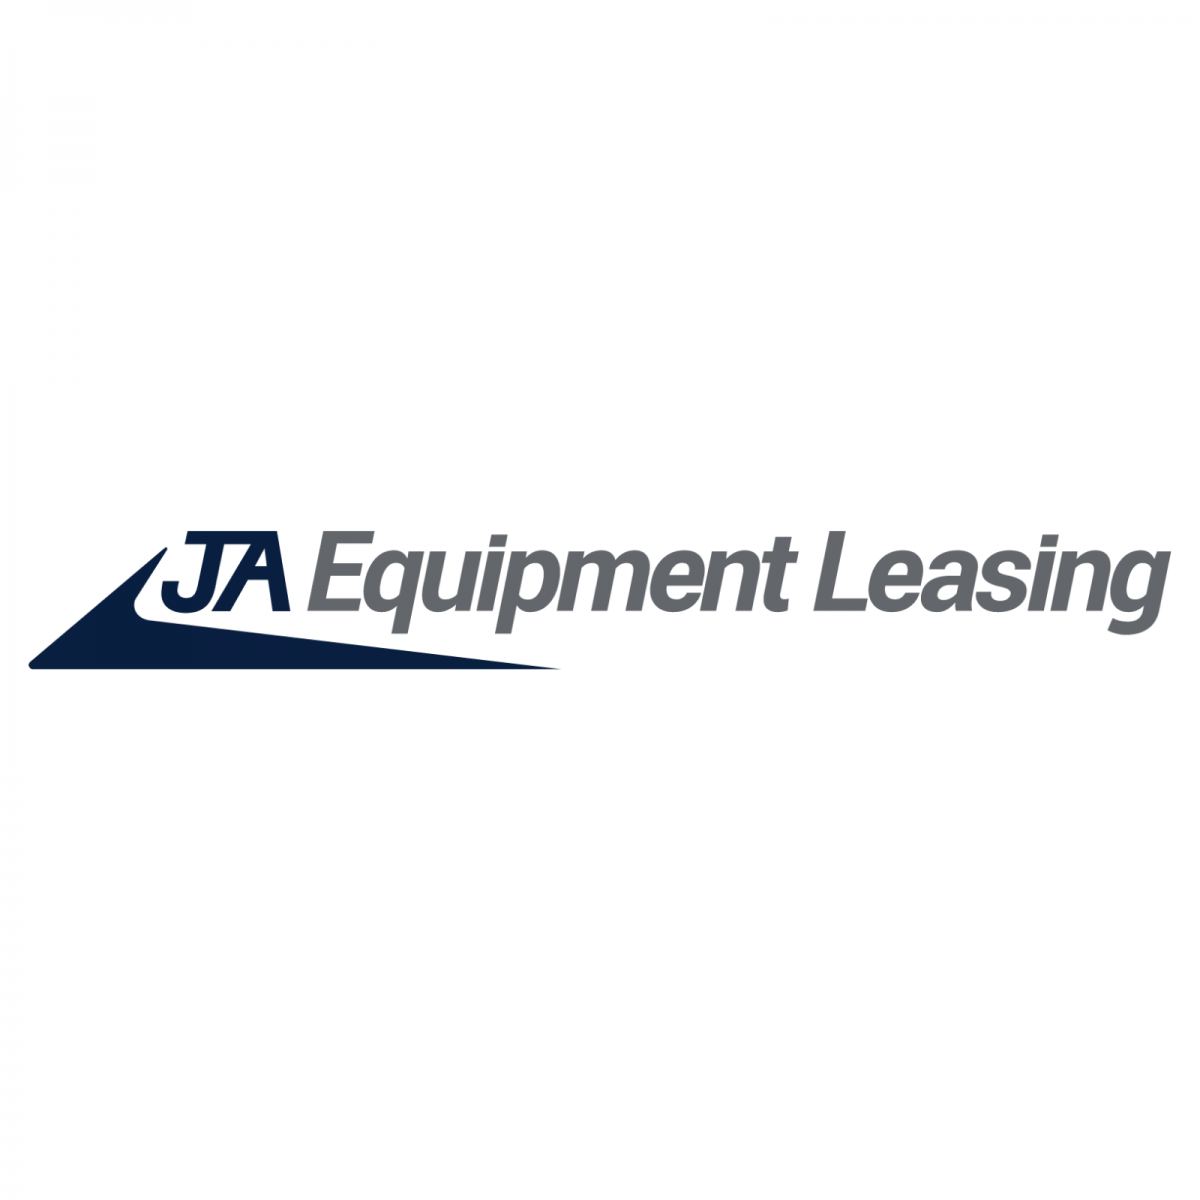 JA Equipment Leasing services